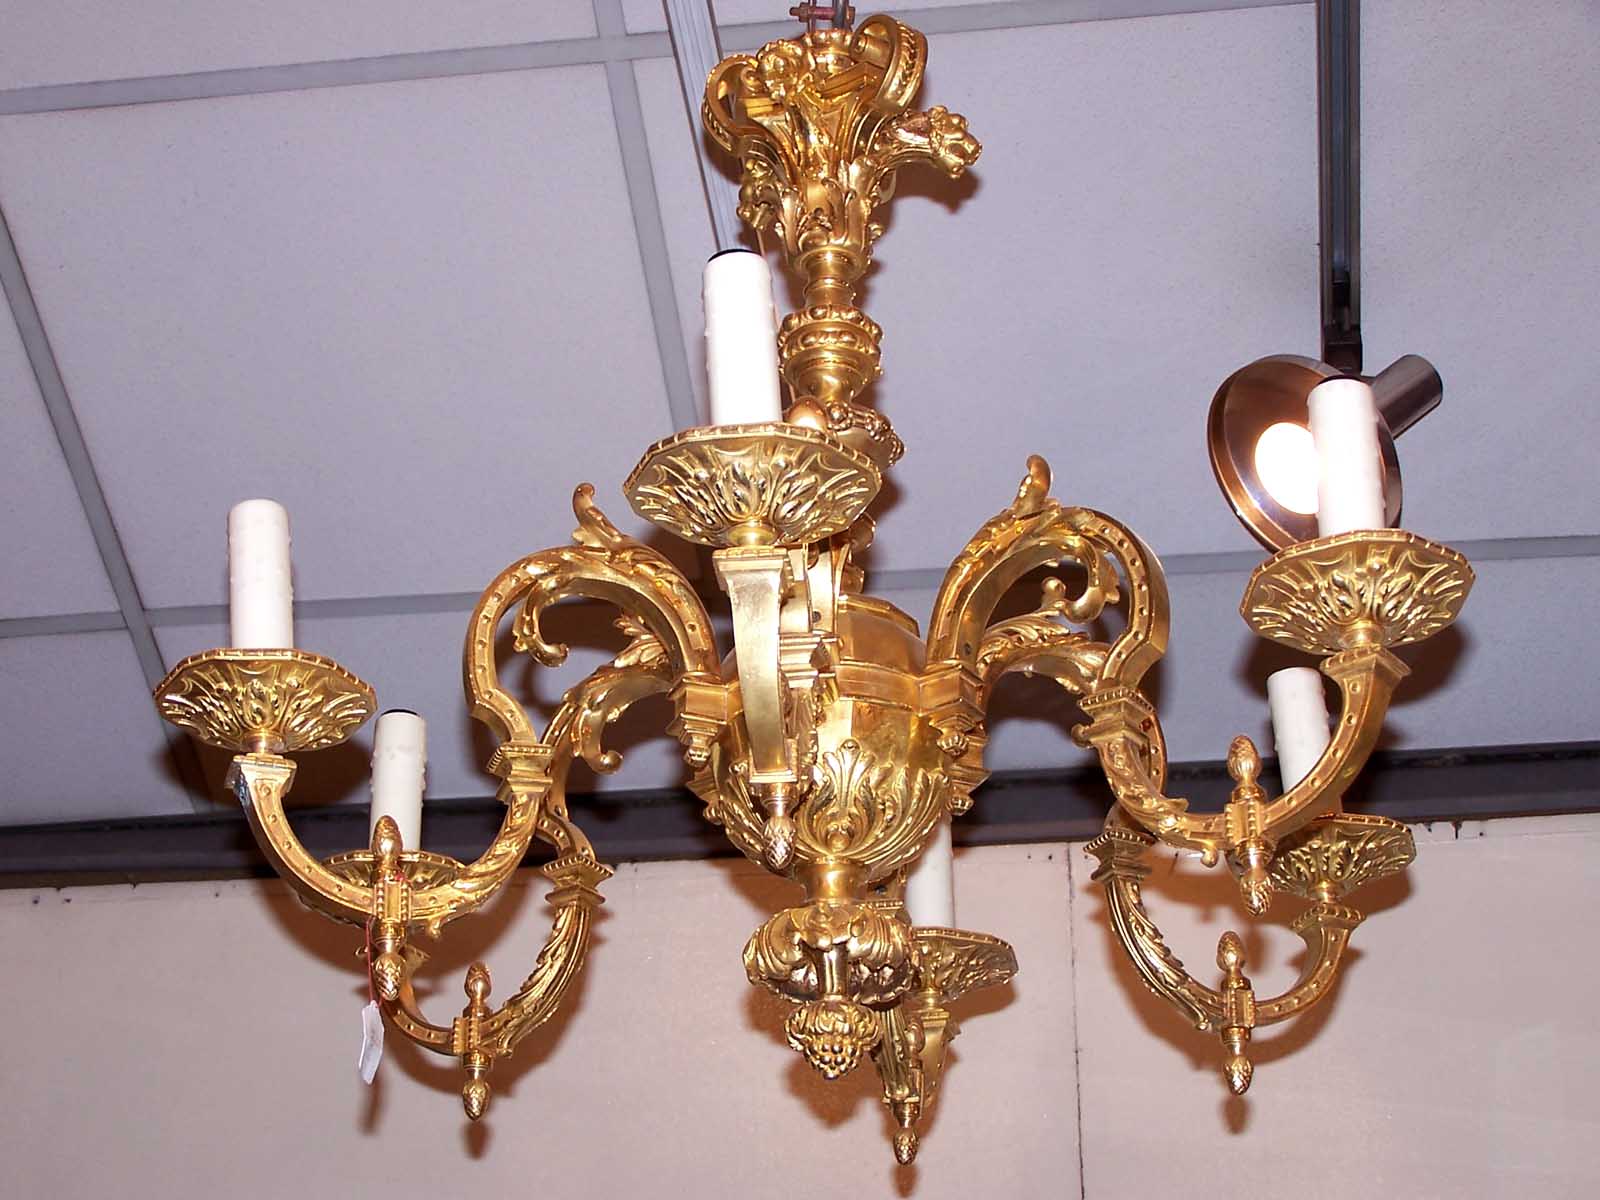 French, Louis XIV style, bronze d'ore, six-arm chandelier